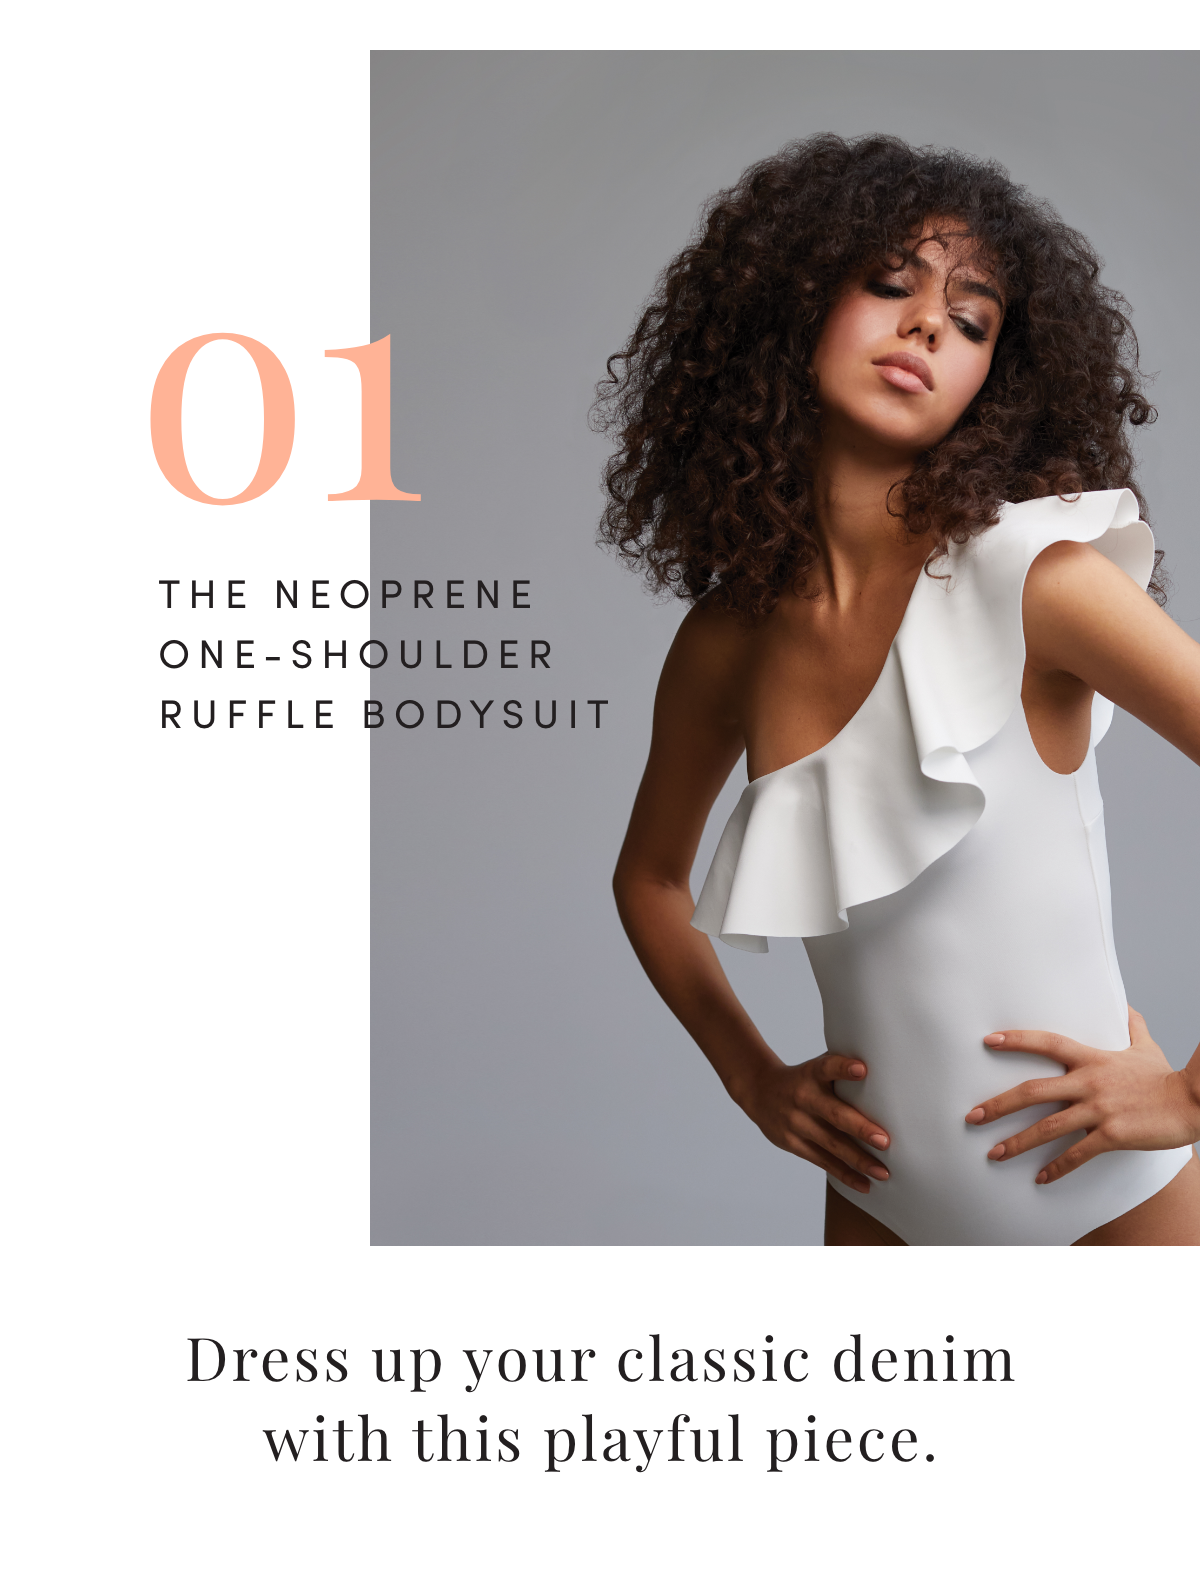 The Neoprene One-Shoulder Ruffle Bodysuit